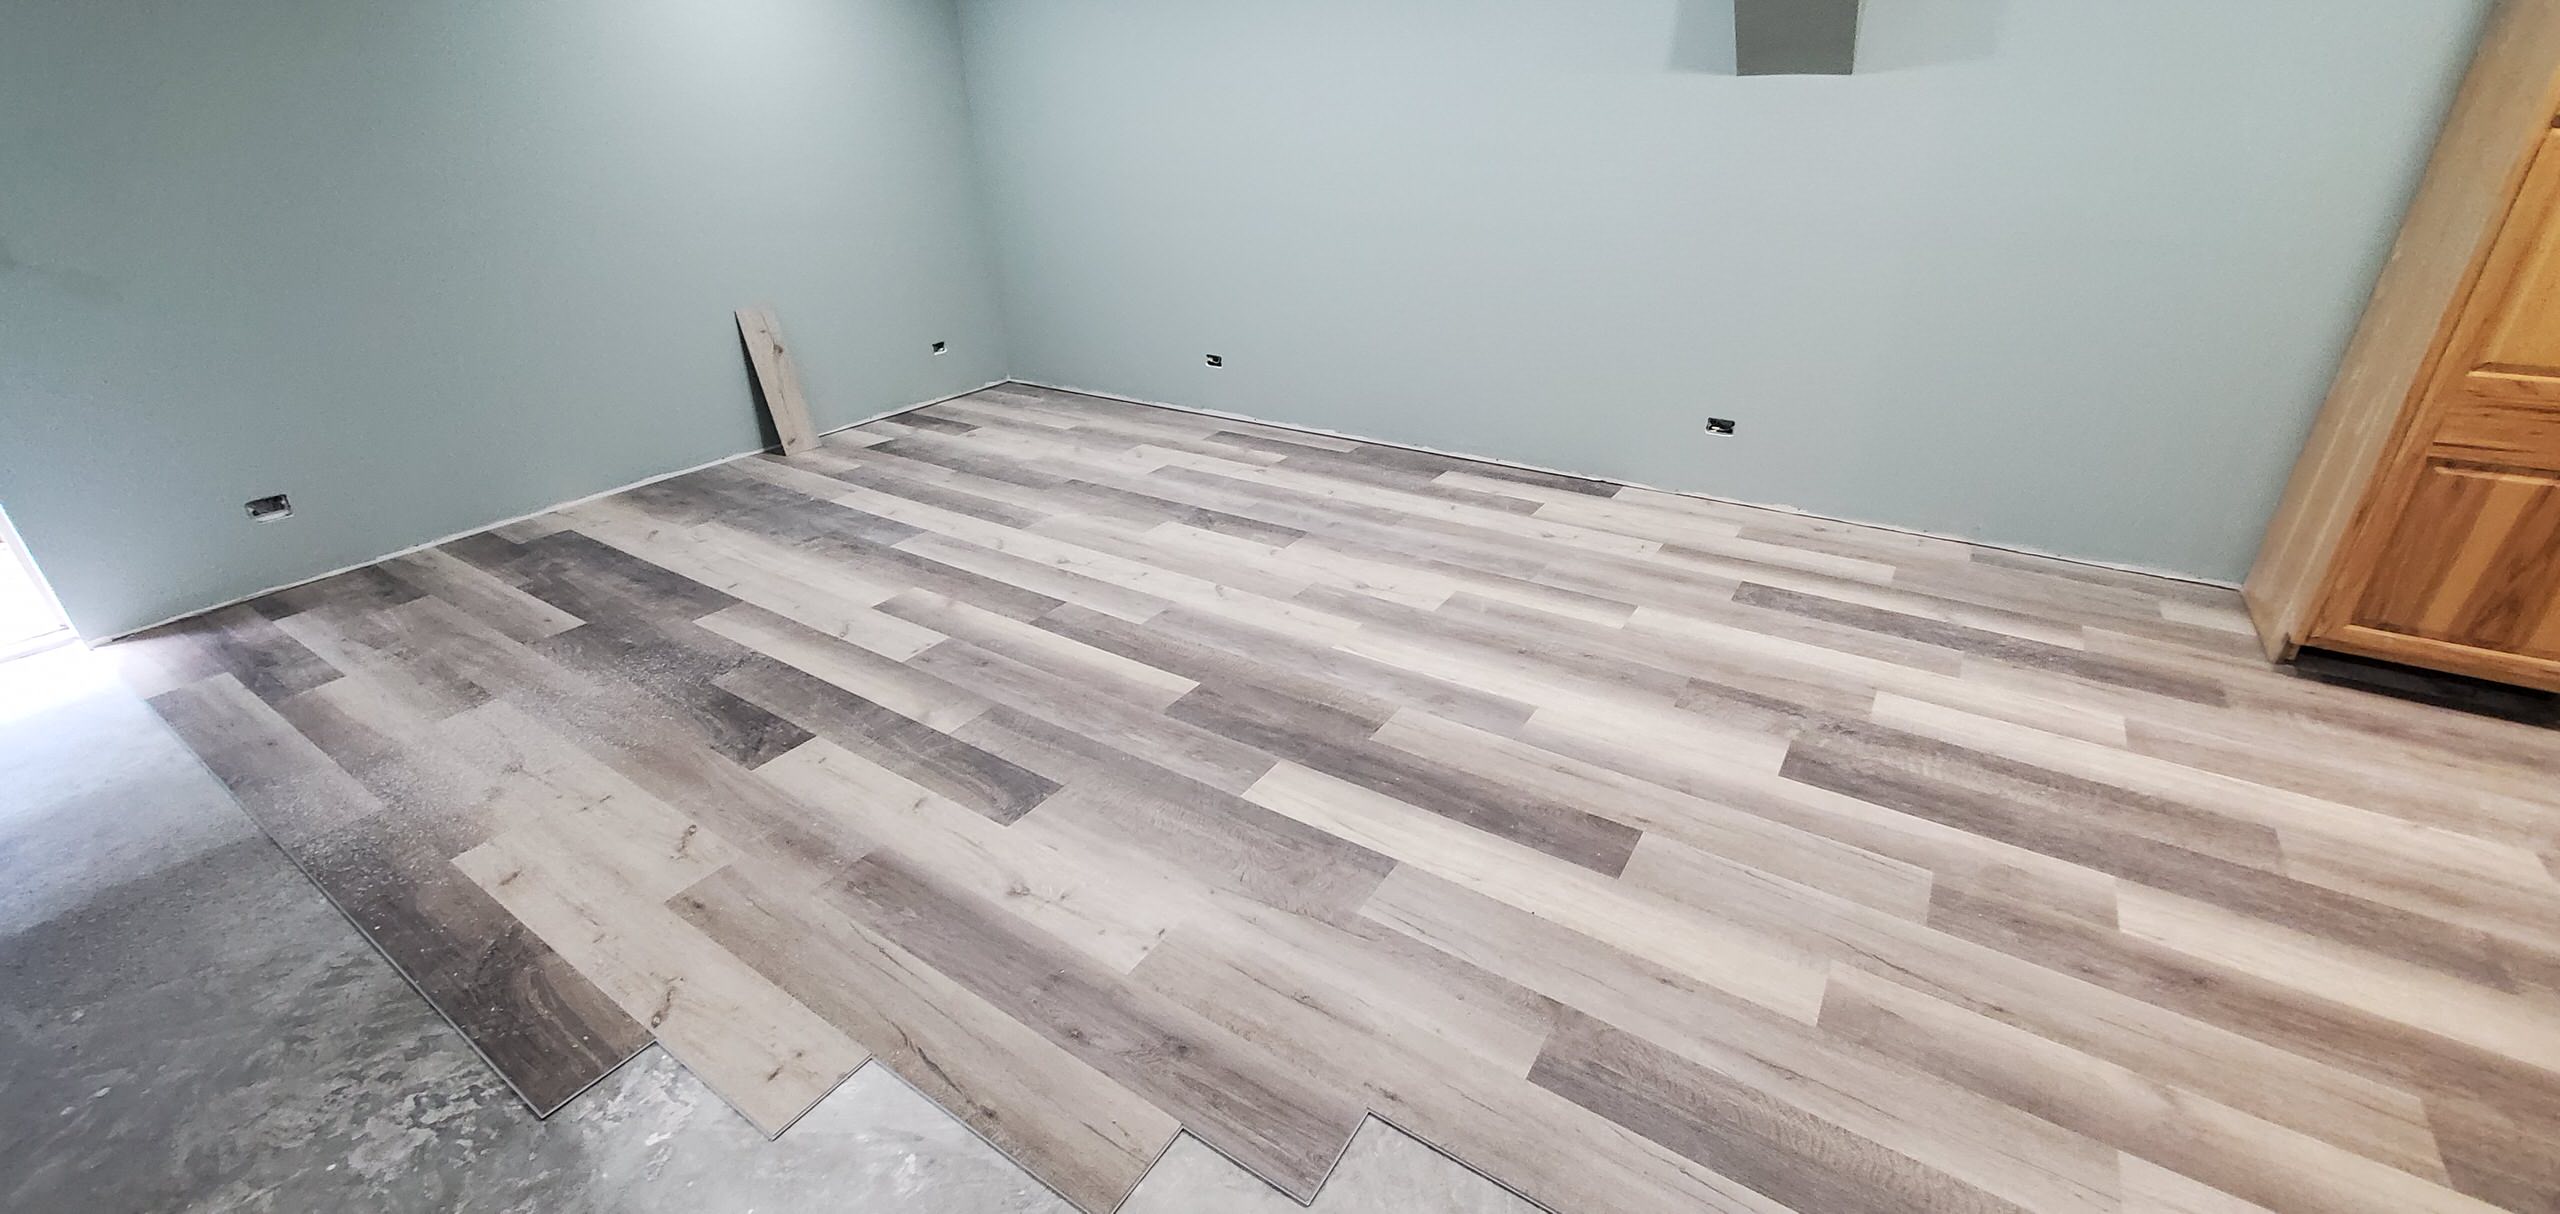 Finished basement Duralux Performance vinyl plank flooring in progress